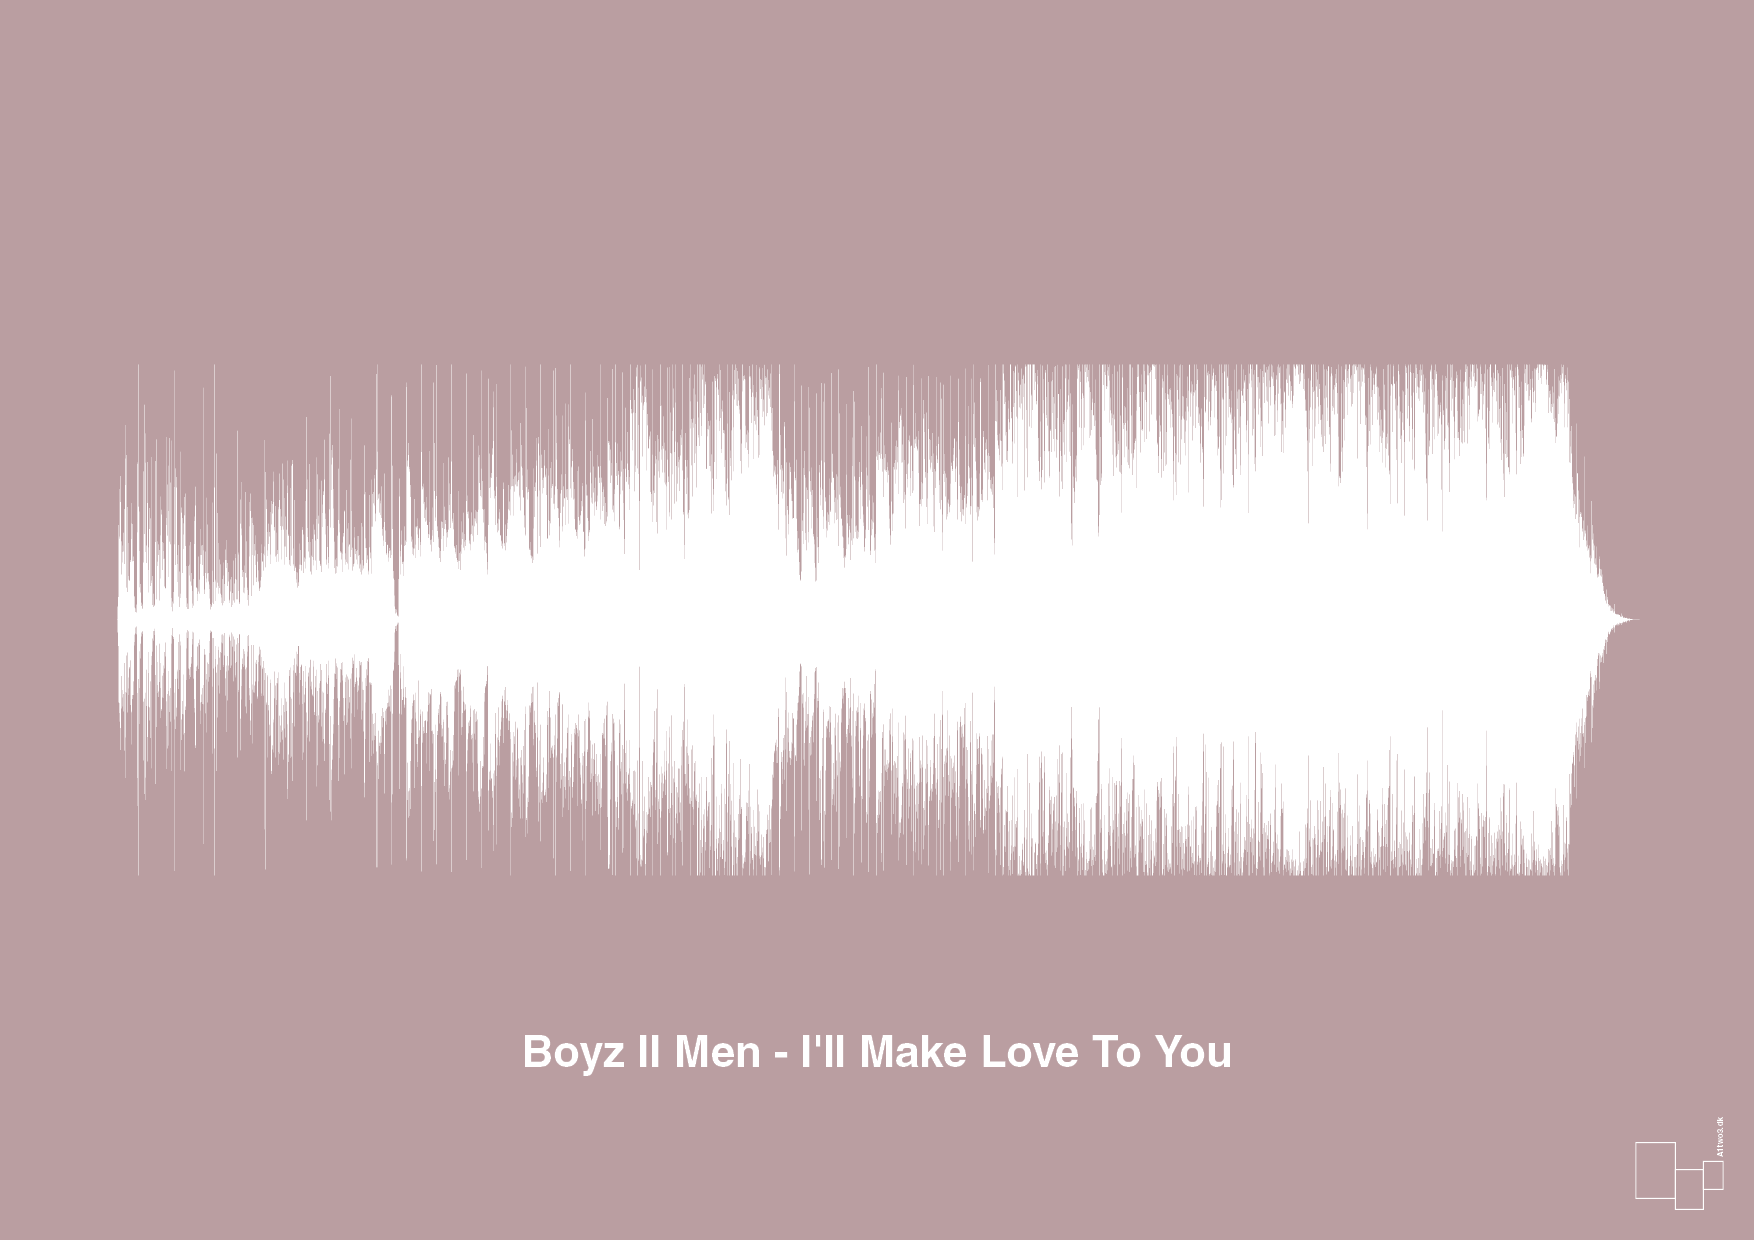 boyz II men - i'll make love to you - Plakat med Musik i Light Rose